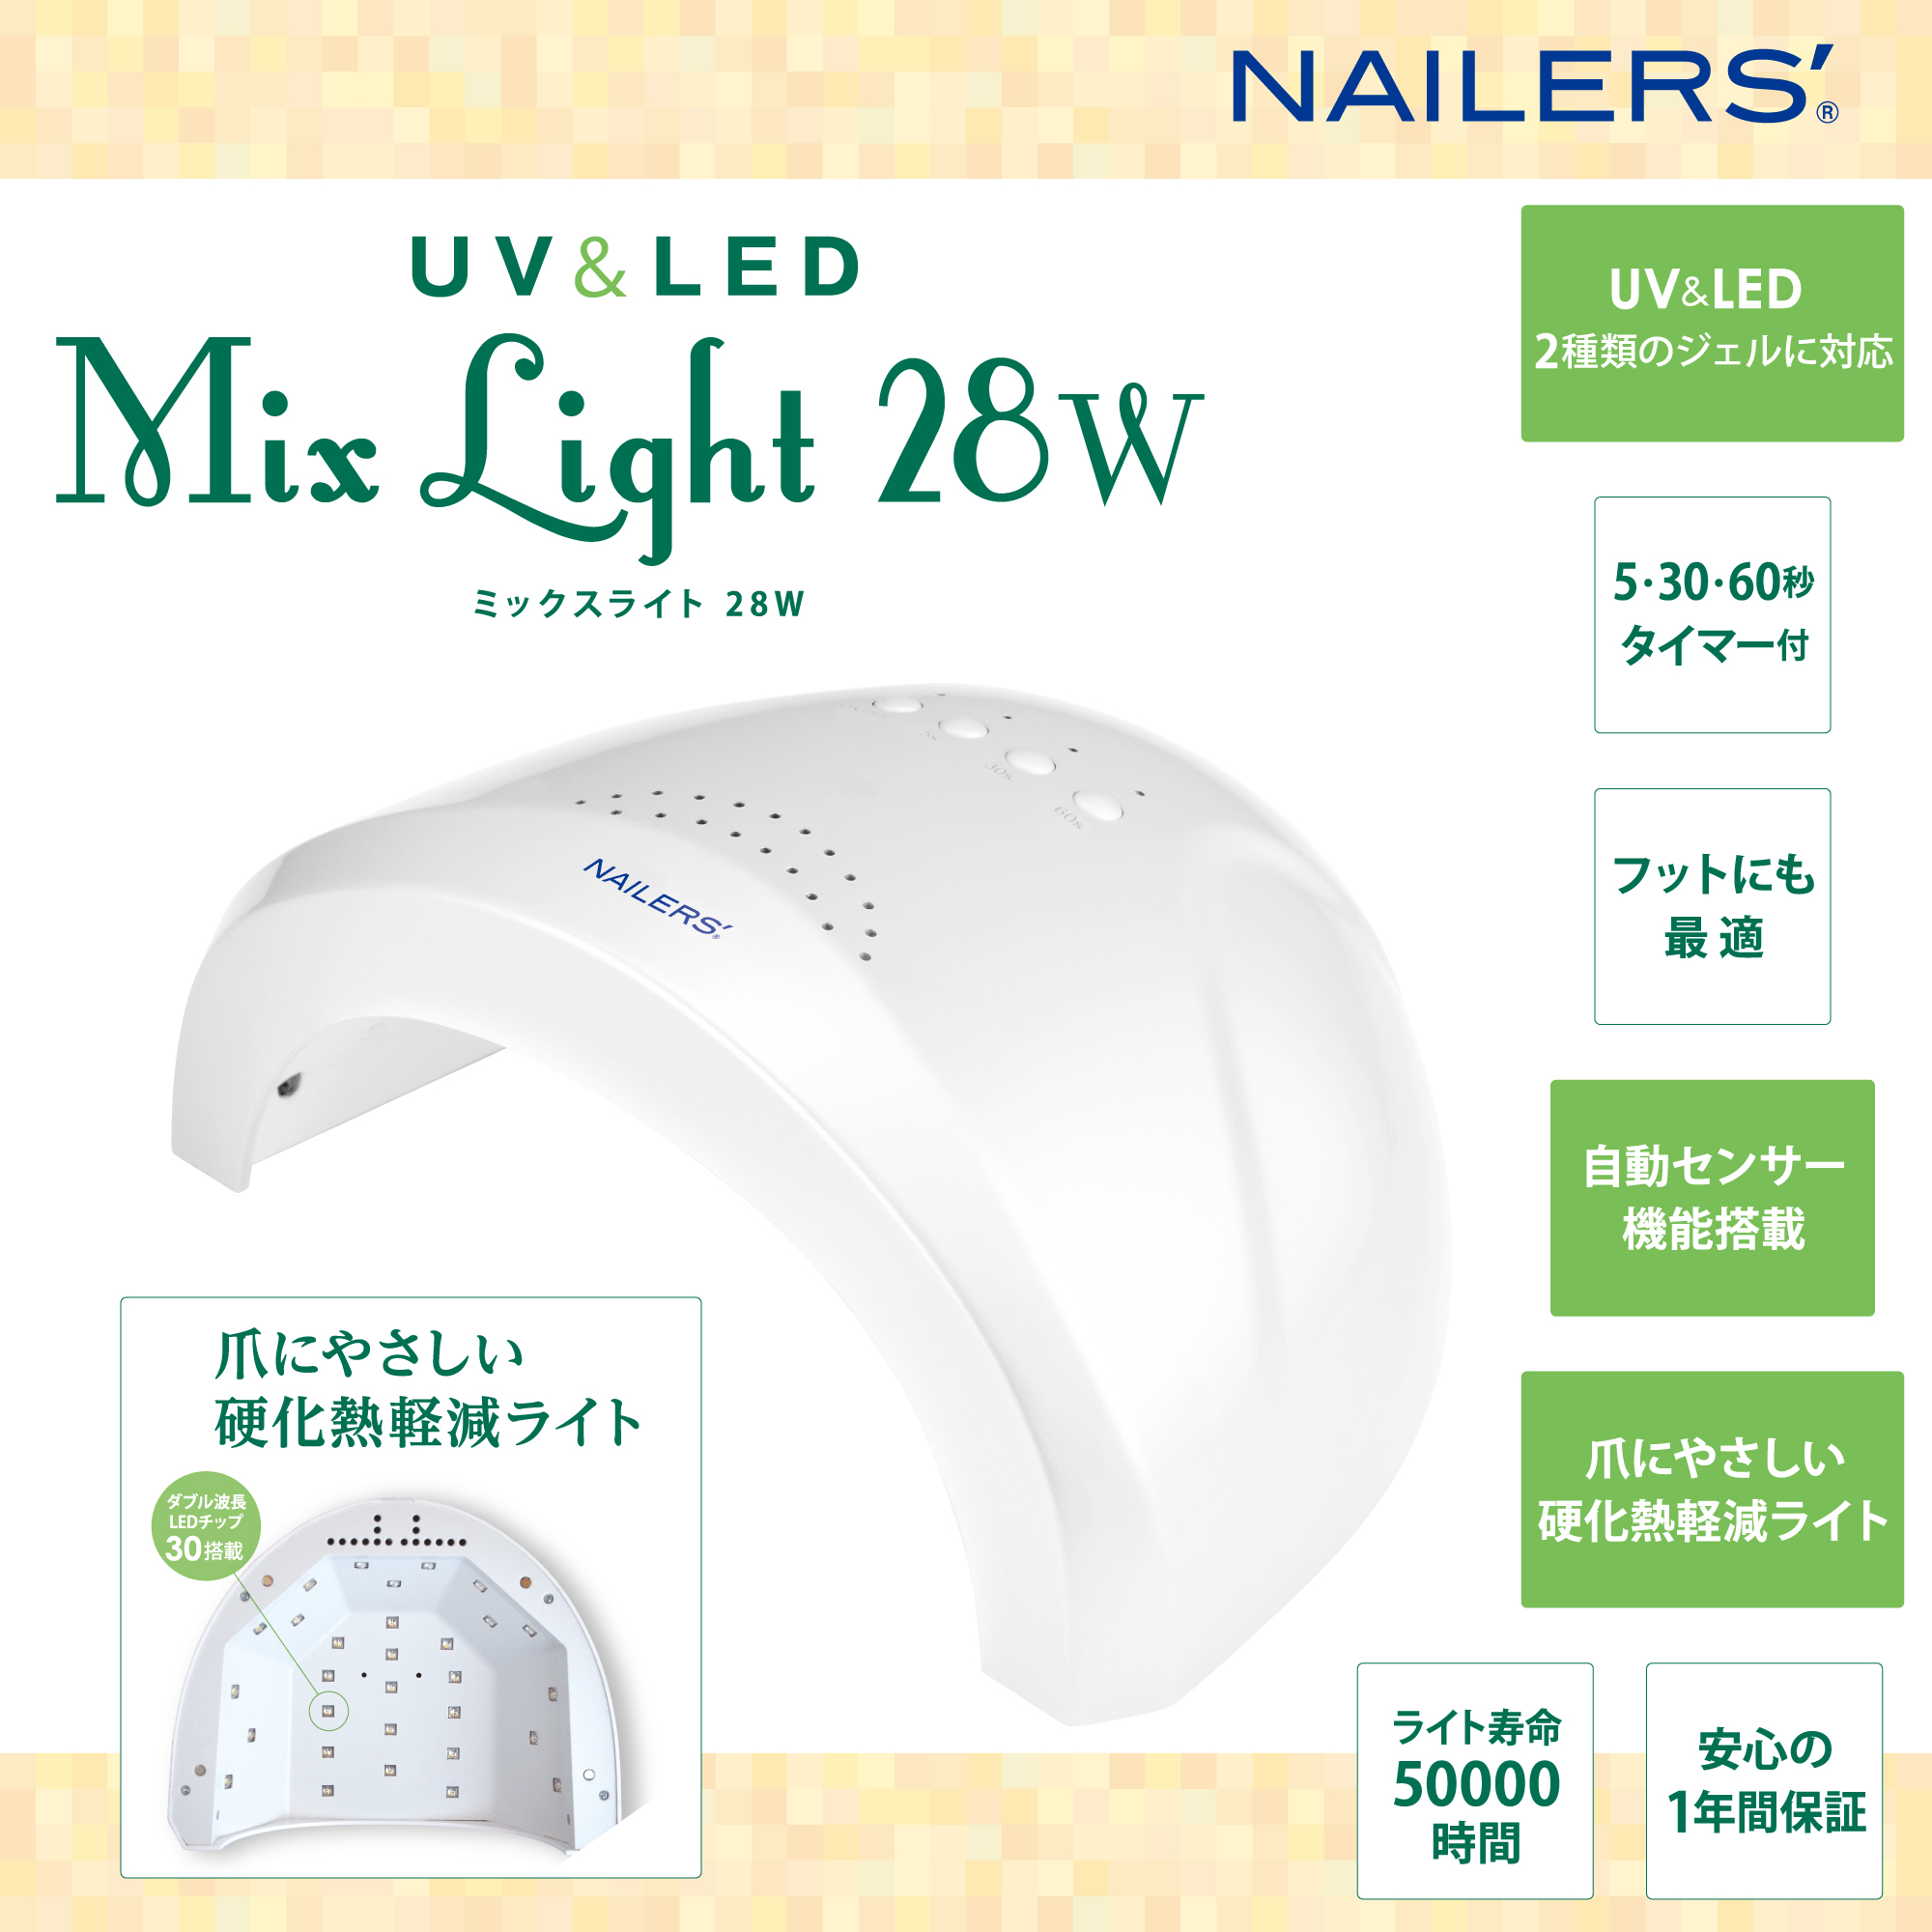 NAILERS' UV/LED ミックスライト28w(ULM-2)画像